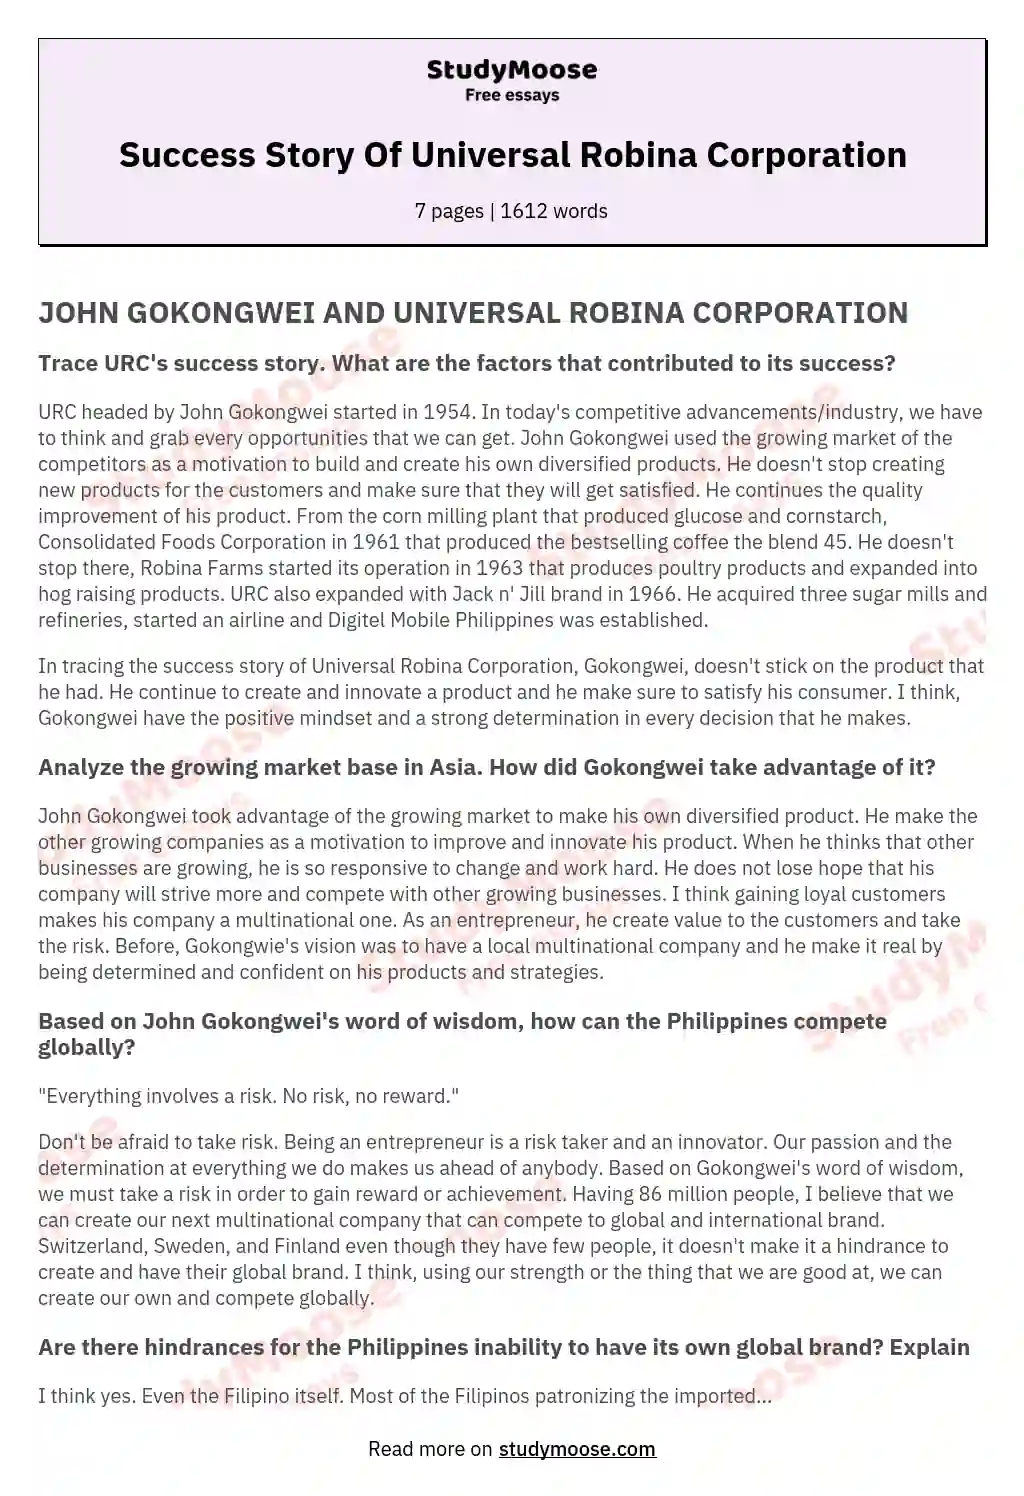 Success Story Of Universal Robina Corporation essay